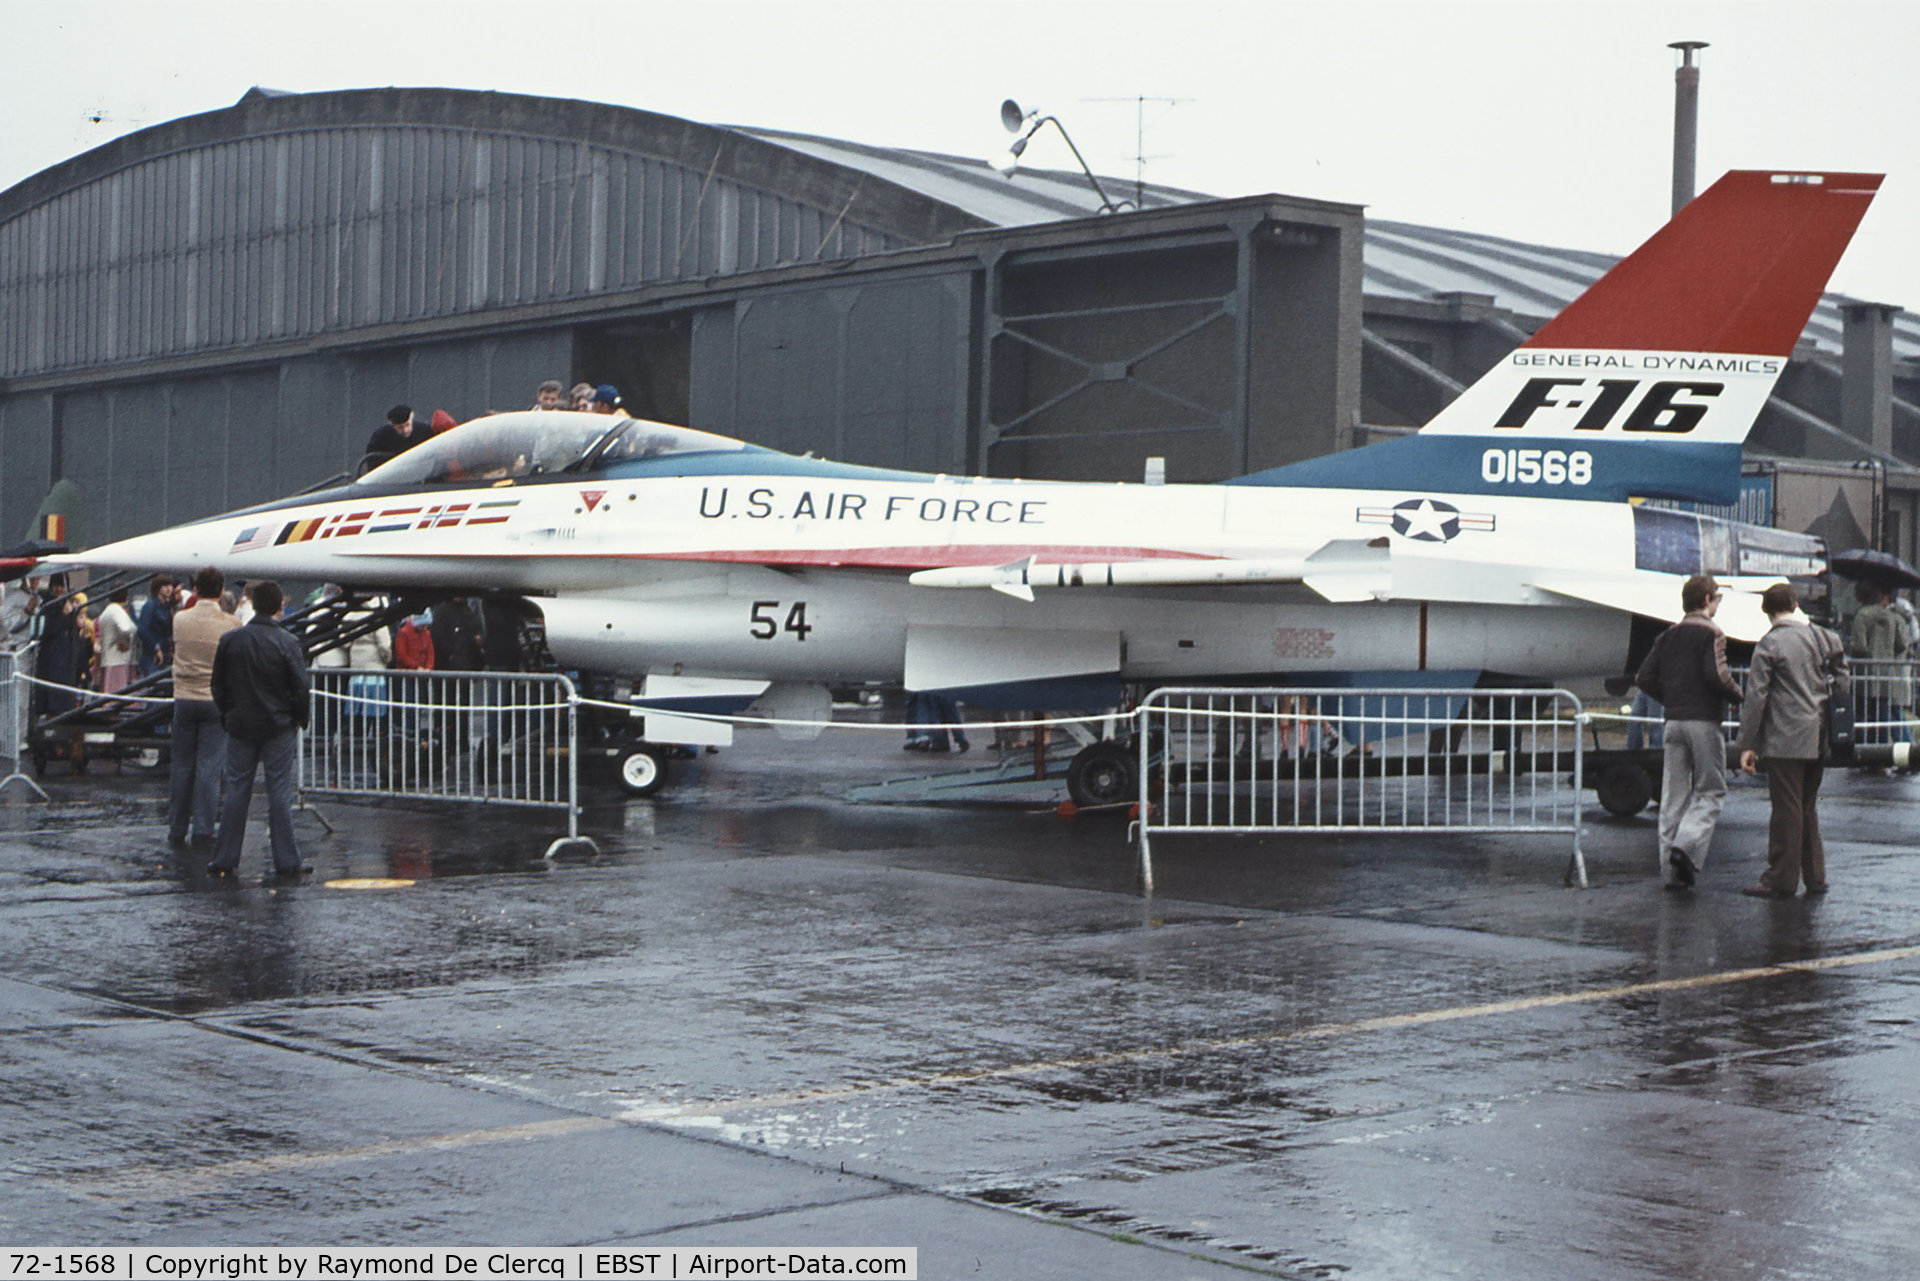 72-1568, 1972 General Dynamics YF-16 C/N 60-2, BAF airshow Brustem in July 1977.